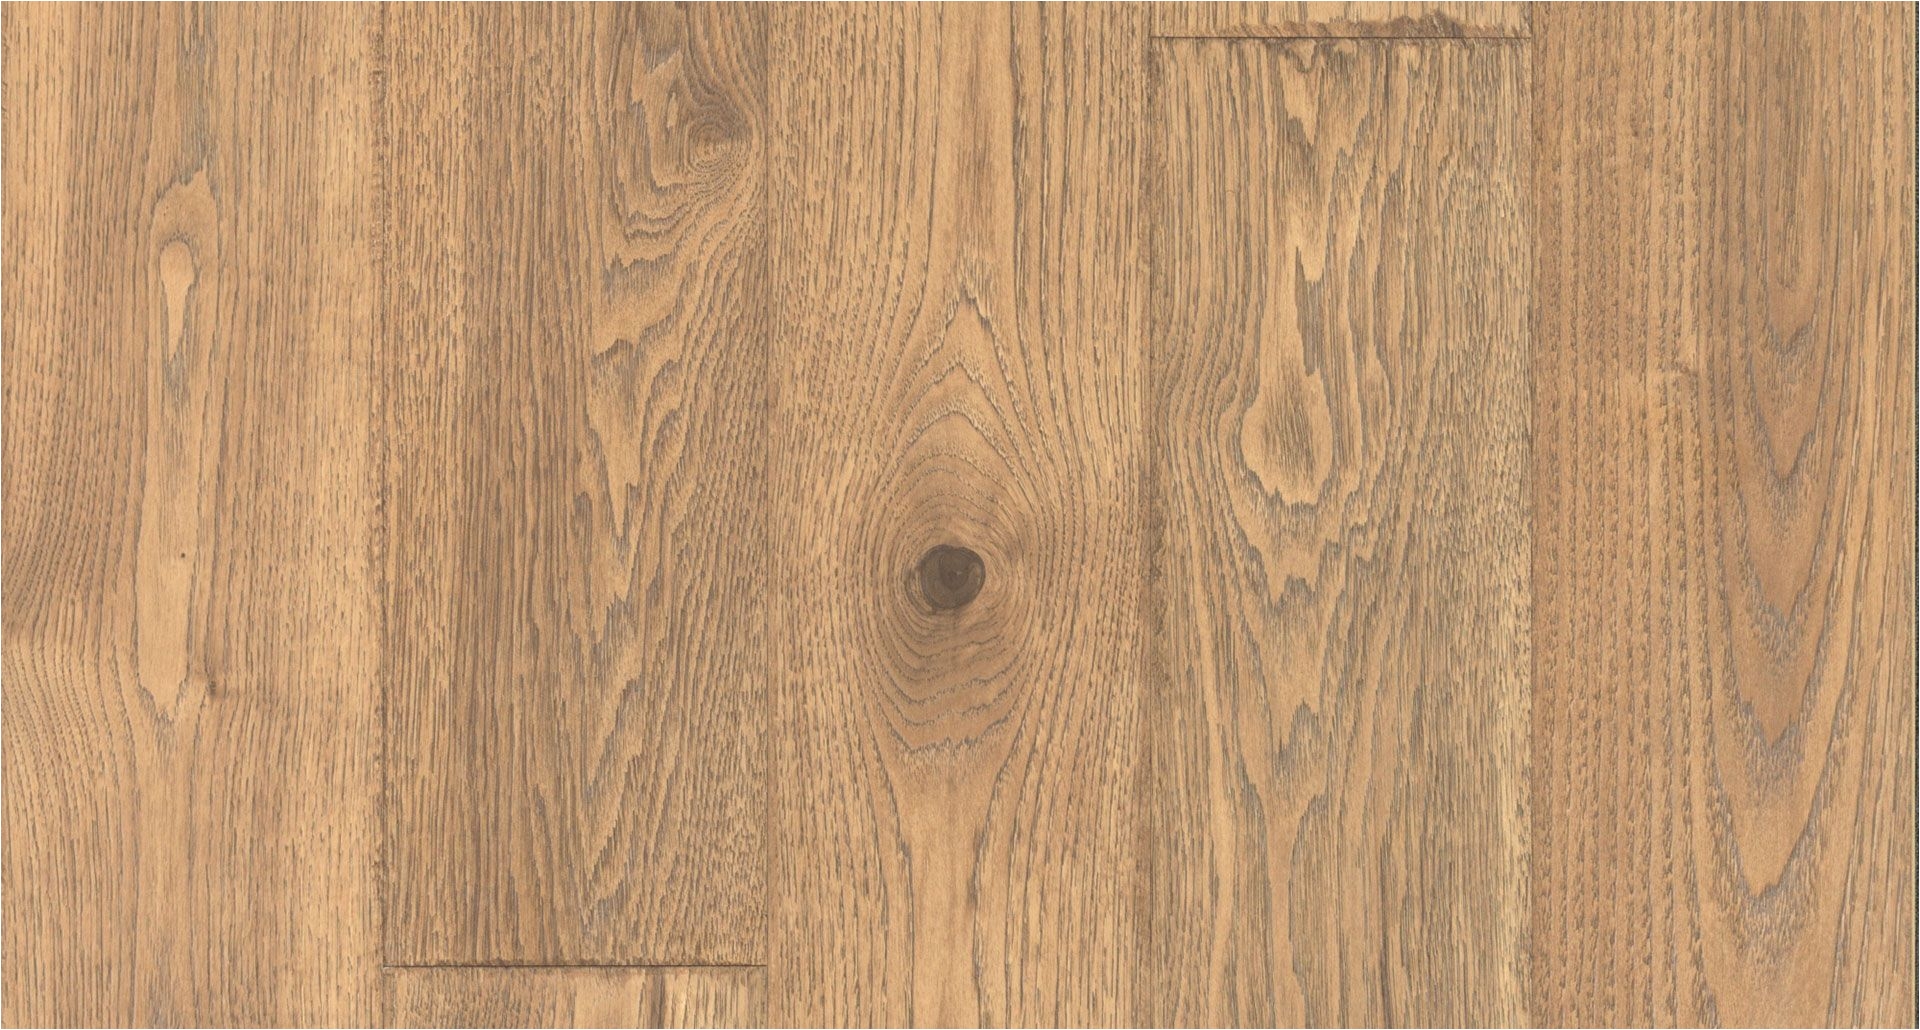 brier creek oak laminate floor natural wood look 12mm thick 1